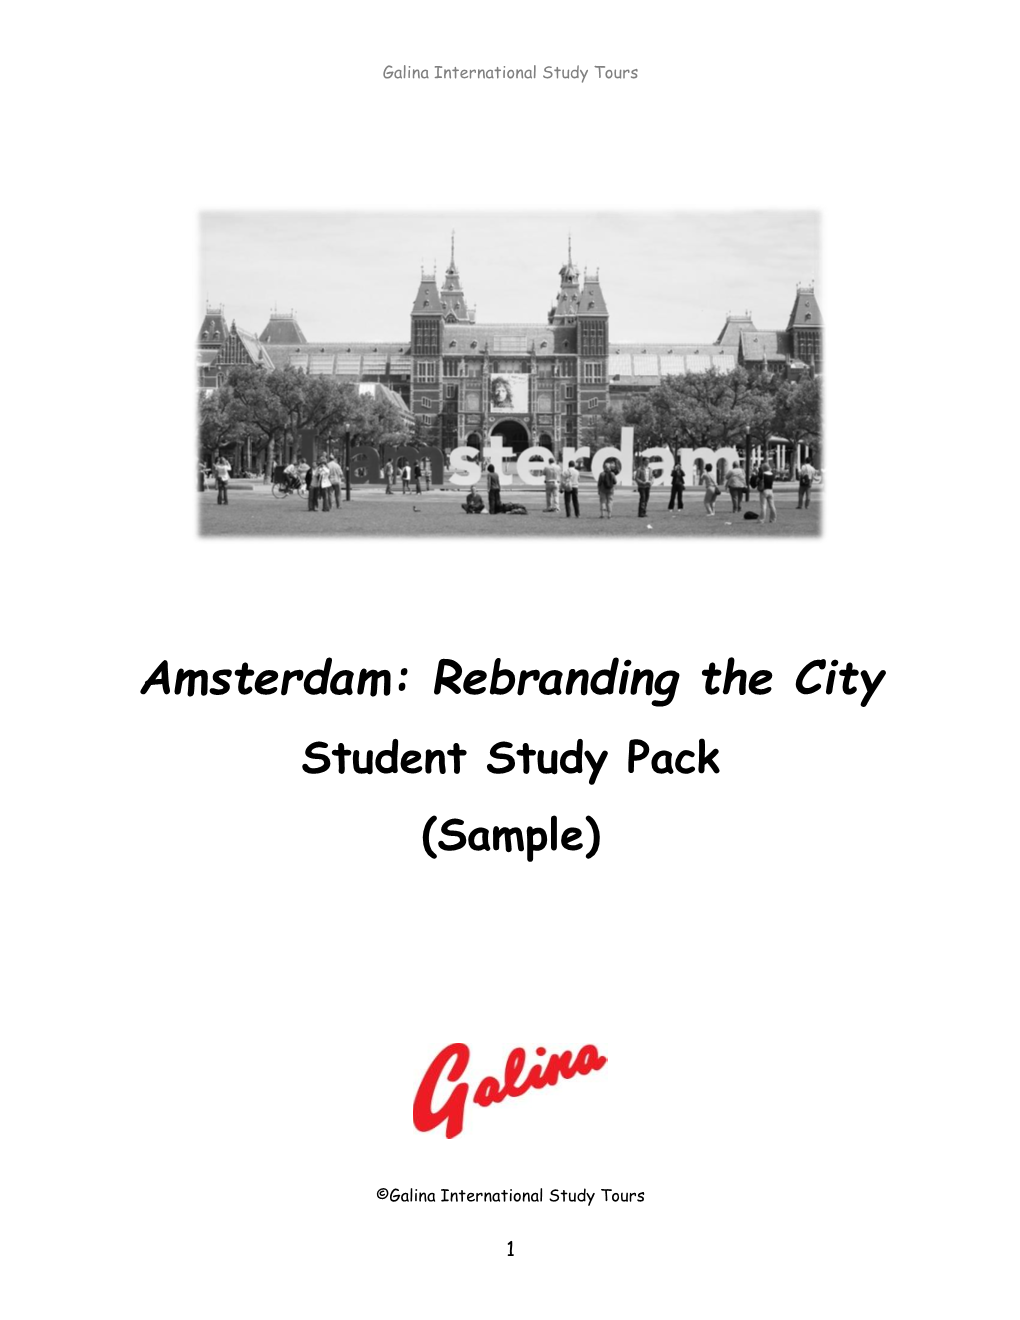 Amsterdam: Rebranding the City Student Study Pack (Sample)